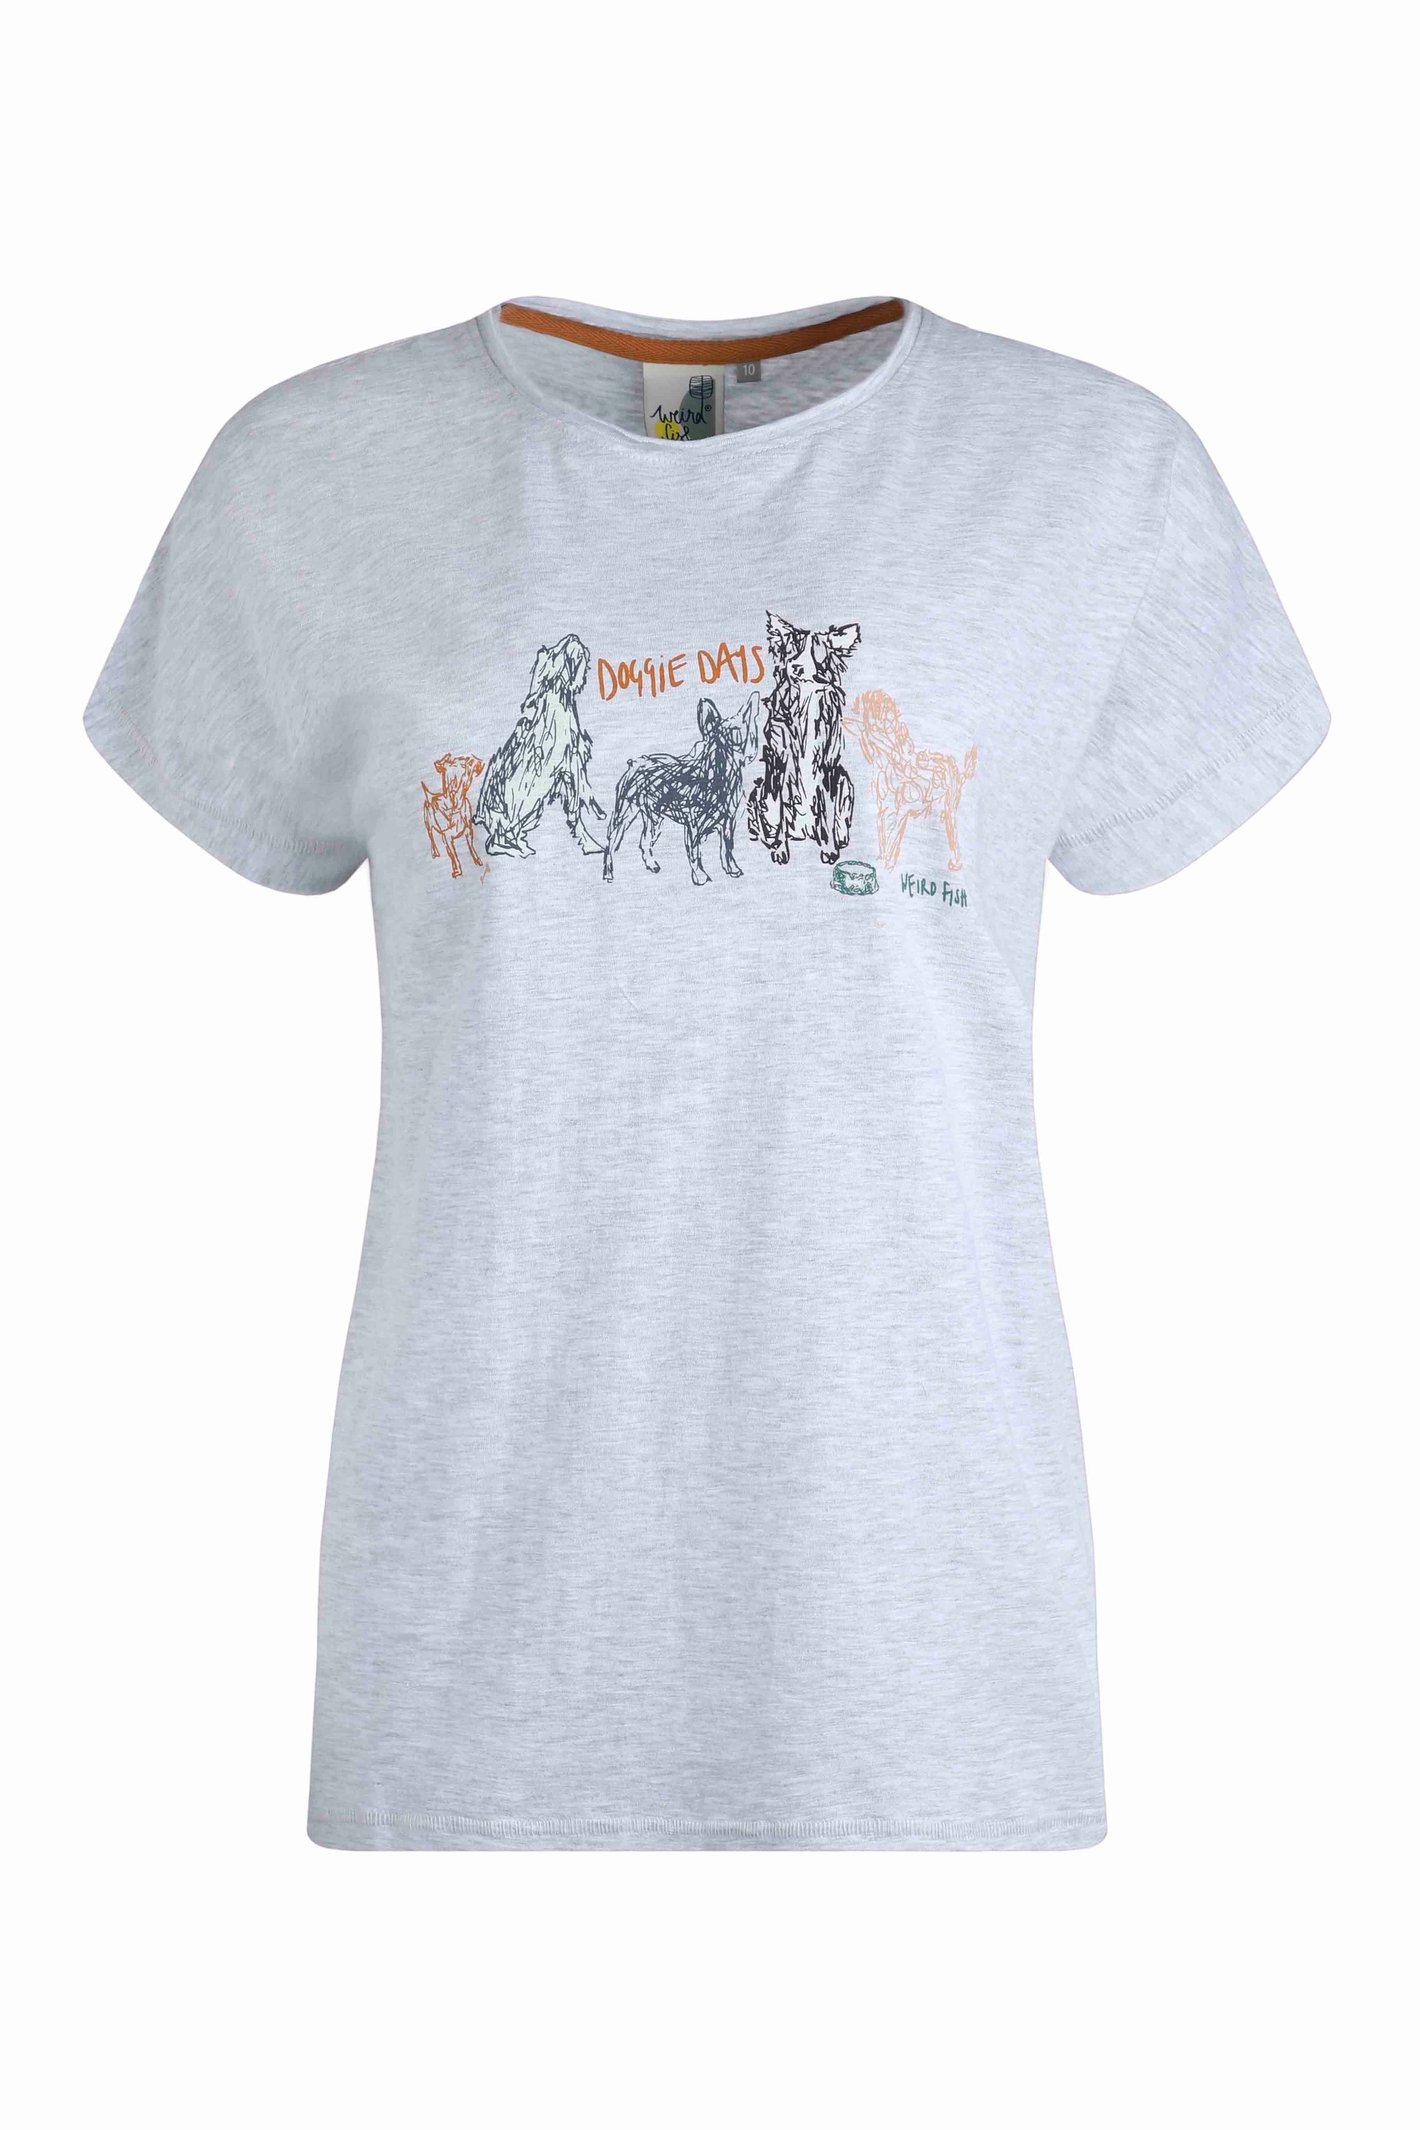 Weird Fish Doggie Day Organic Graphic T-Shirt Grey Marl Size 10